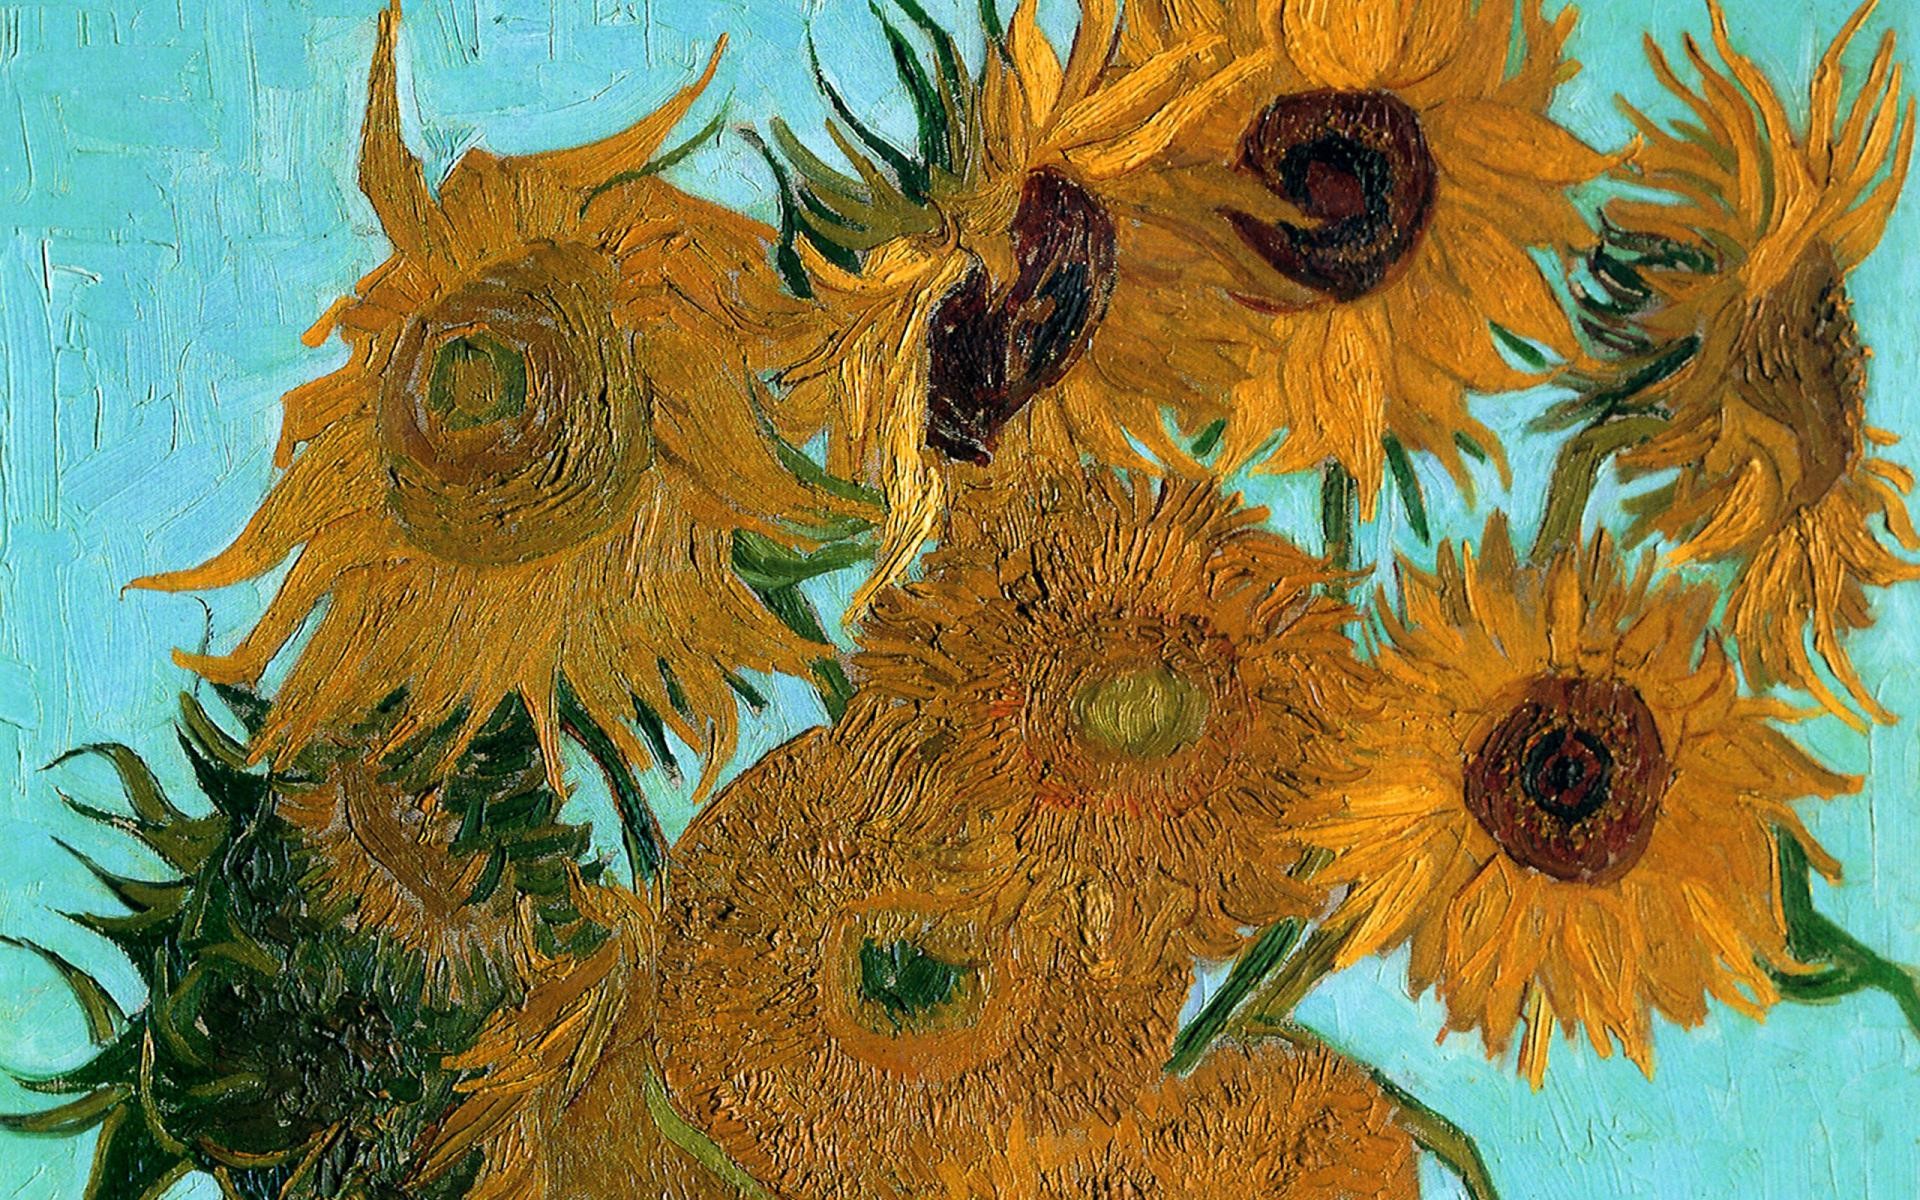 1920x1200 Van, Gogh, Full, Hd, Wallpaper, For, Desktop, Background, Download, Images,  High Resolution Images, Amazing Pictures, Artwork, 1920Ã1200 Wallpaper HD